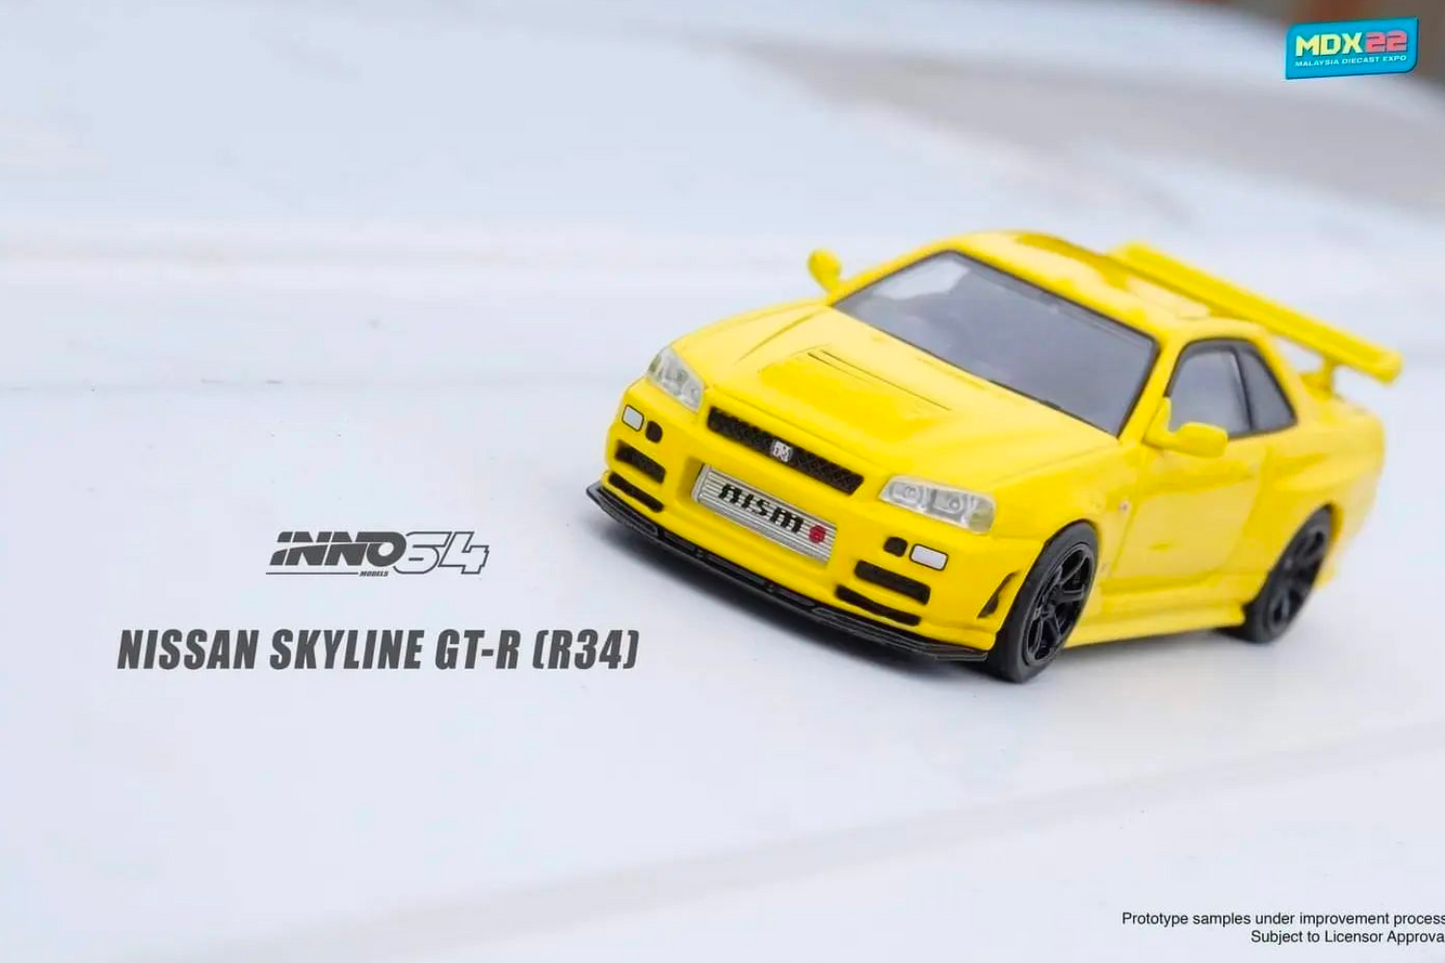 [INNO64] Nissan Skyline GTR (R34) Lightning Yellow (MDX 2022 Event Model)